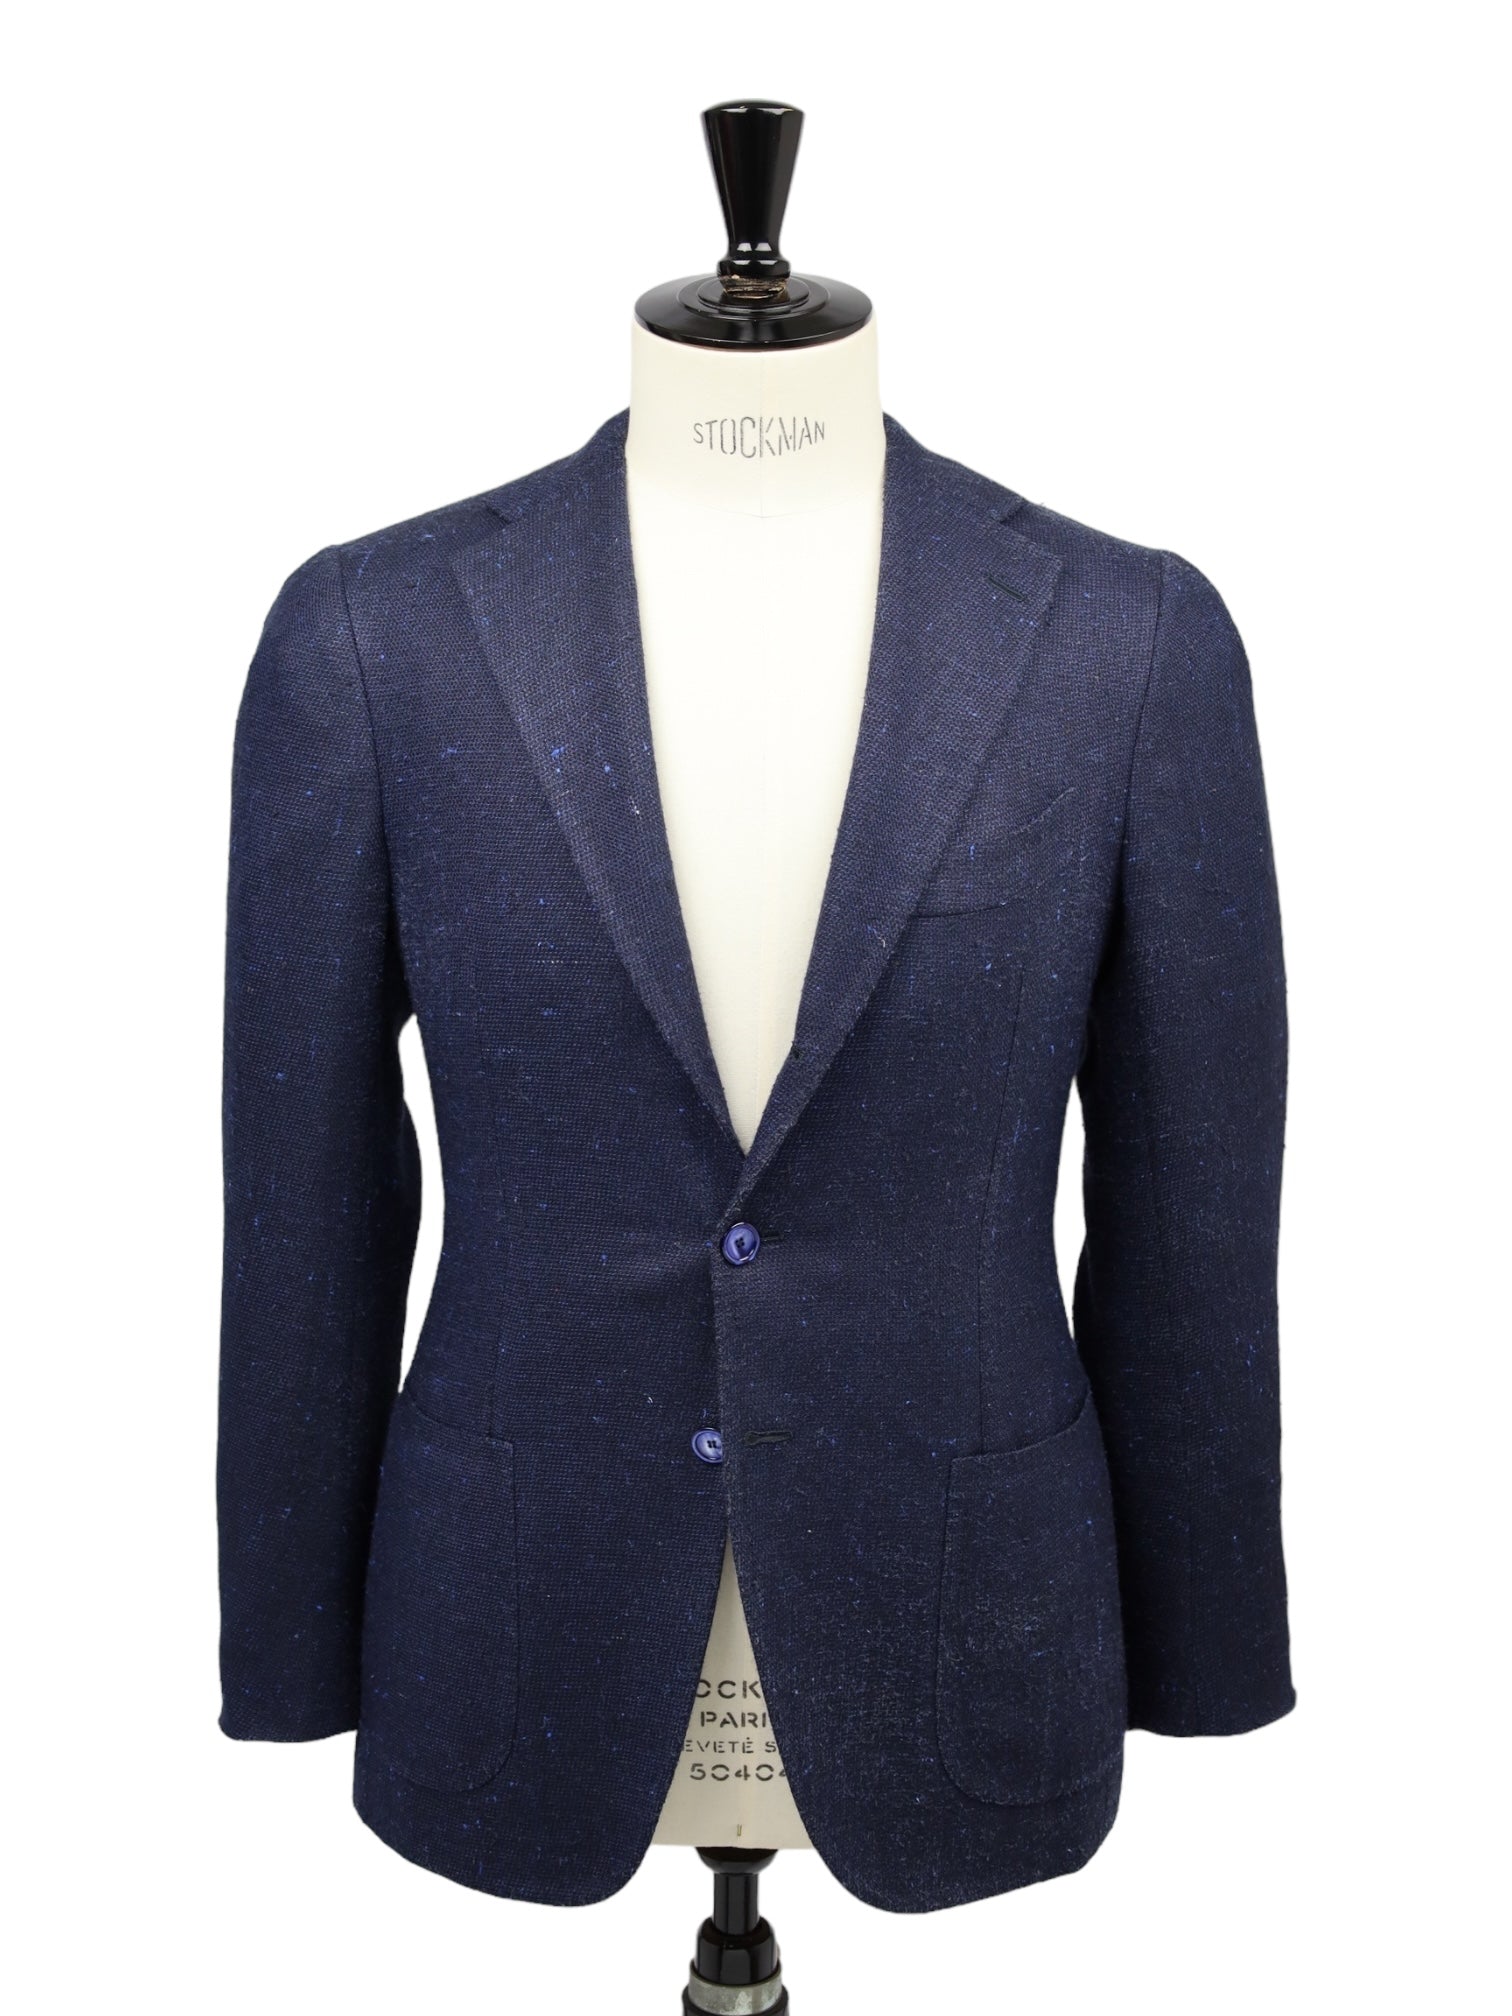 Cesare Attolini marineblauw en lichtblauw donegal wol- en zijden jasje